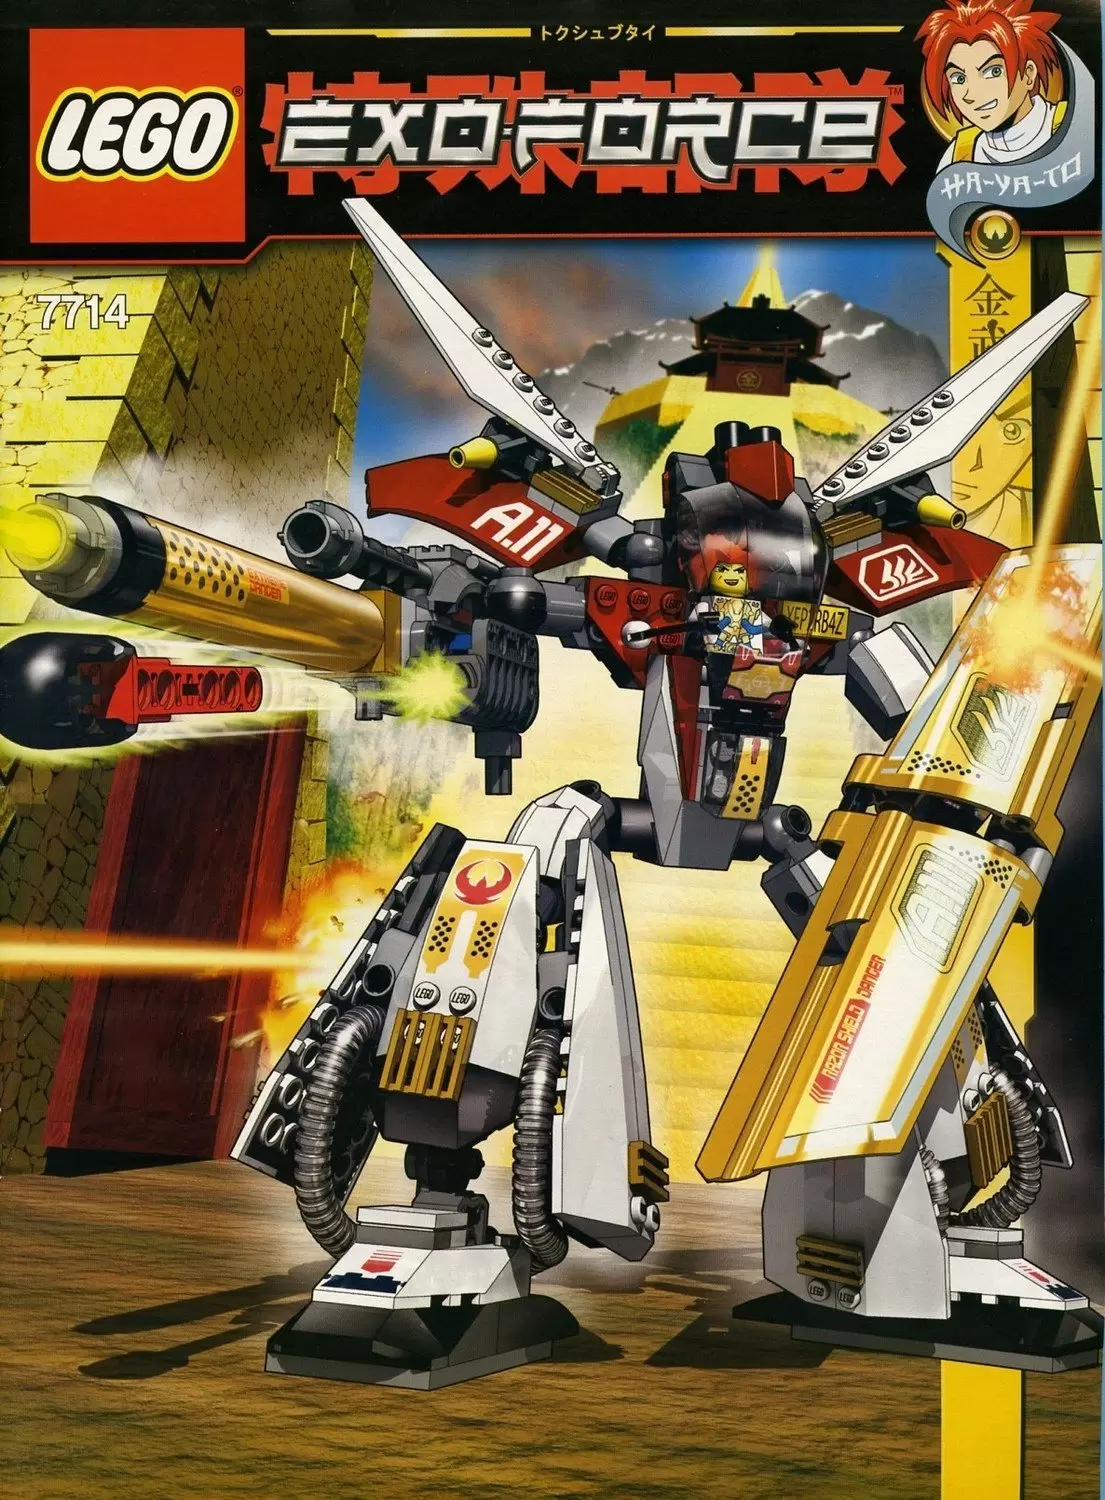 LEGO Exo-force - Golden Guardian